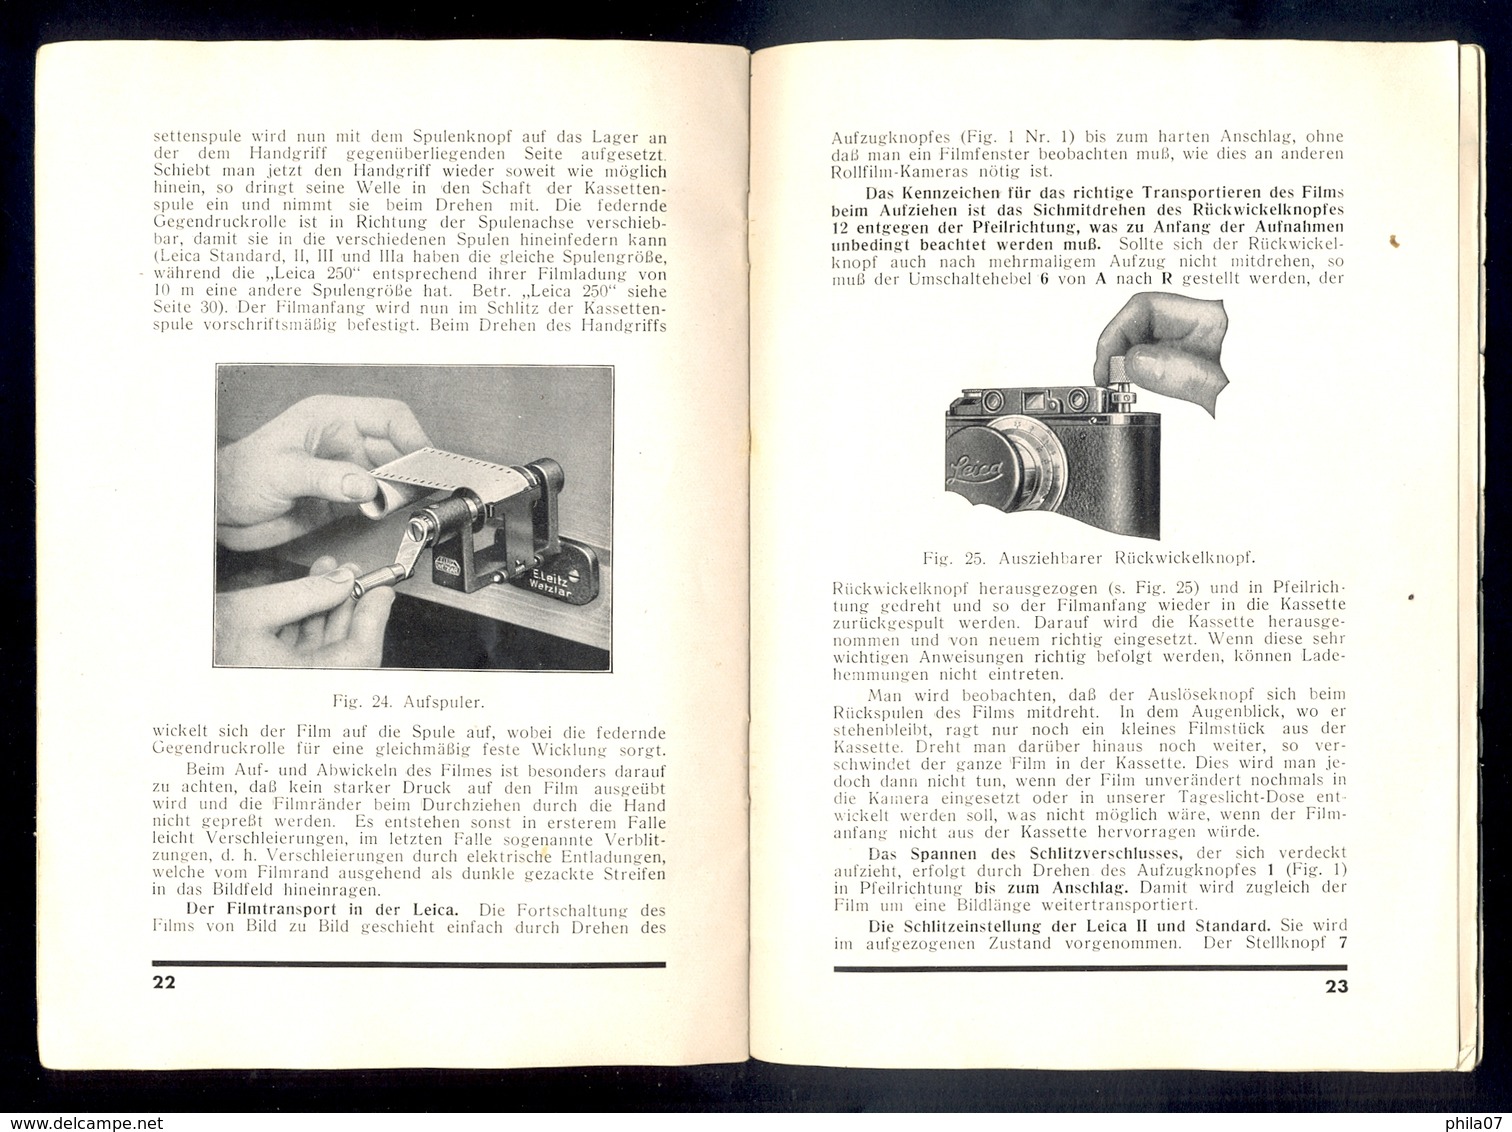 Leica - Leitz, gebrauchs-anleitung zur Leica-Kamera, mit kassette model B. Original prospect and users manual / 9 scans